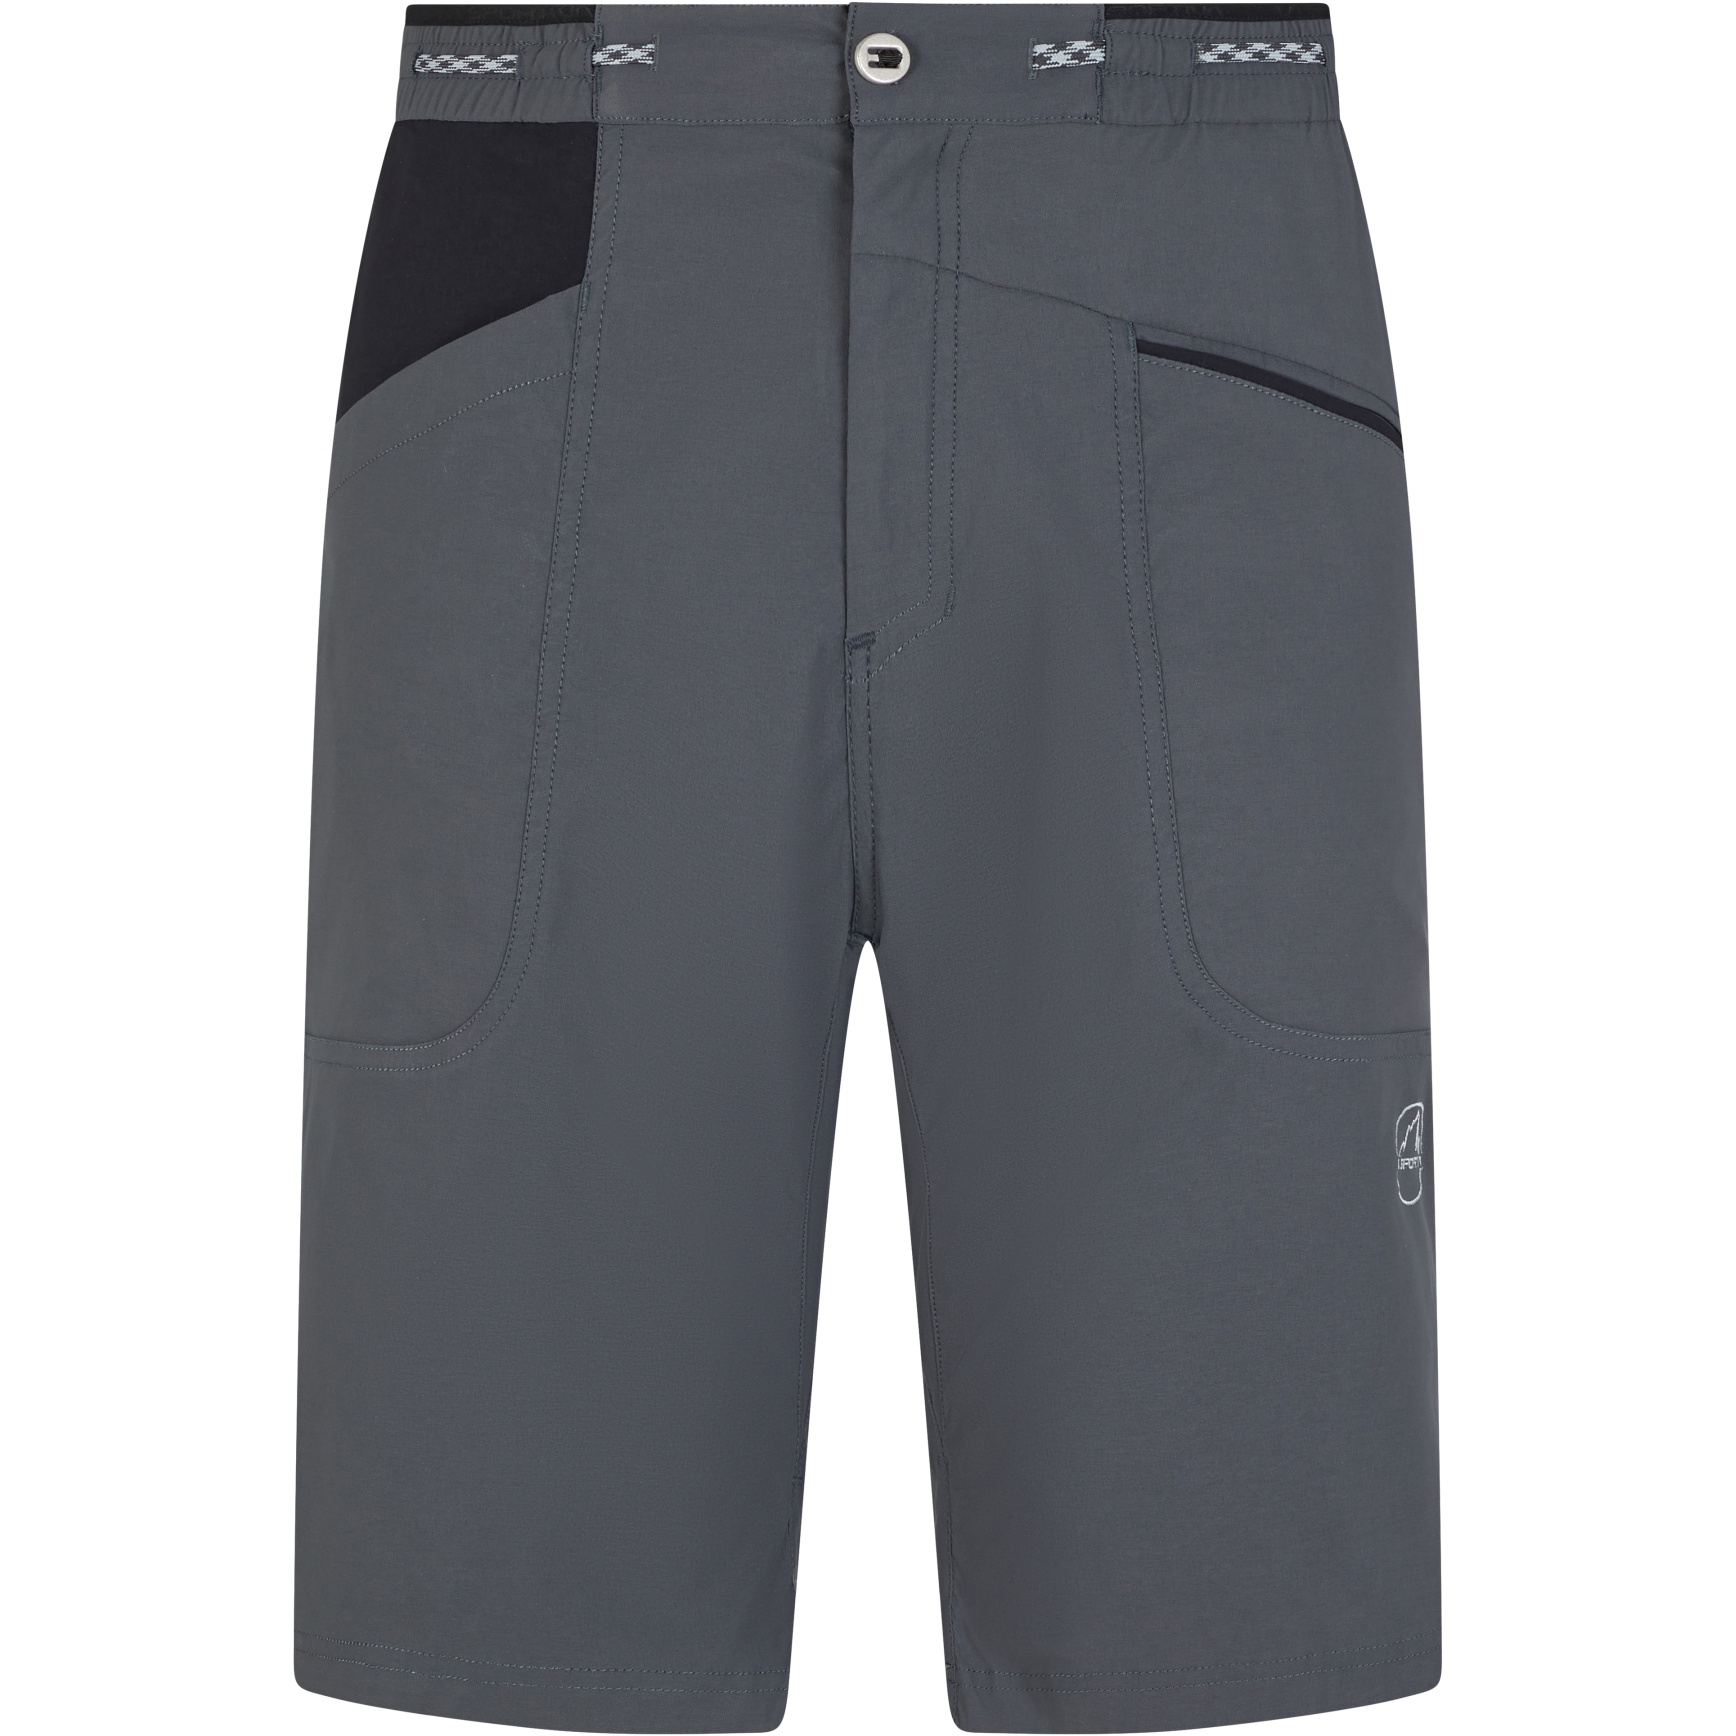 Image of La Sportiva Belay Shorts - Carbon/Black